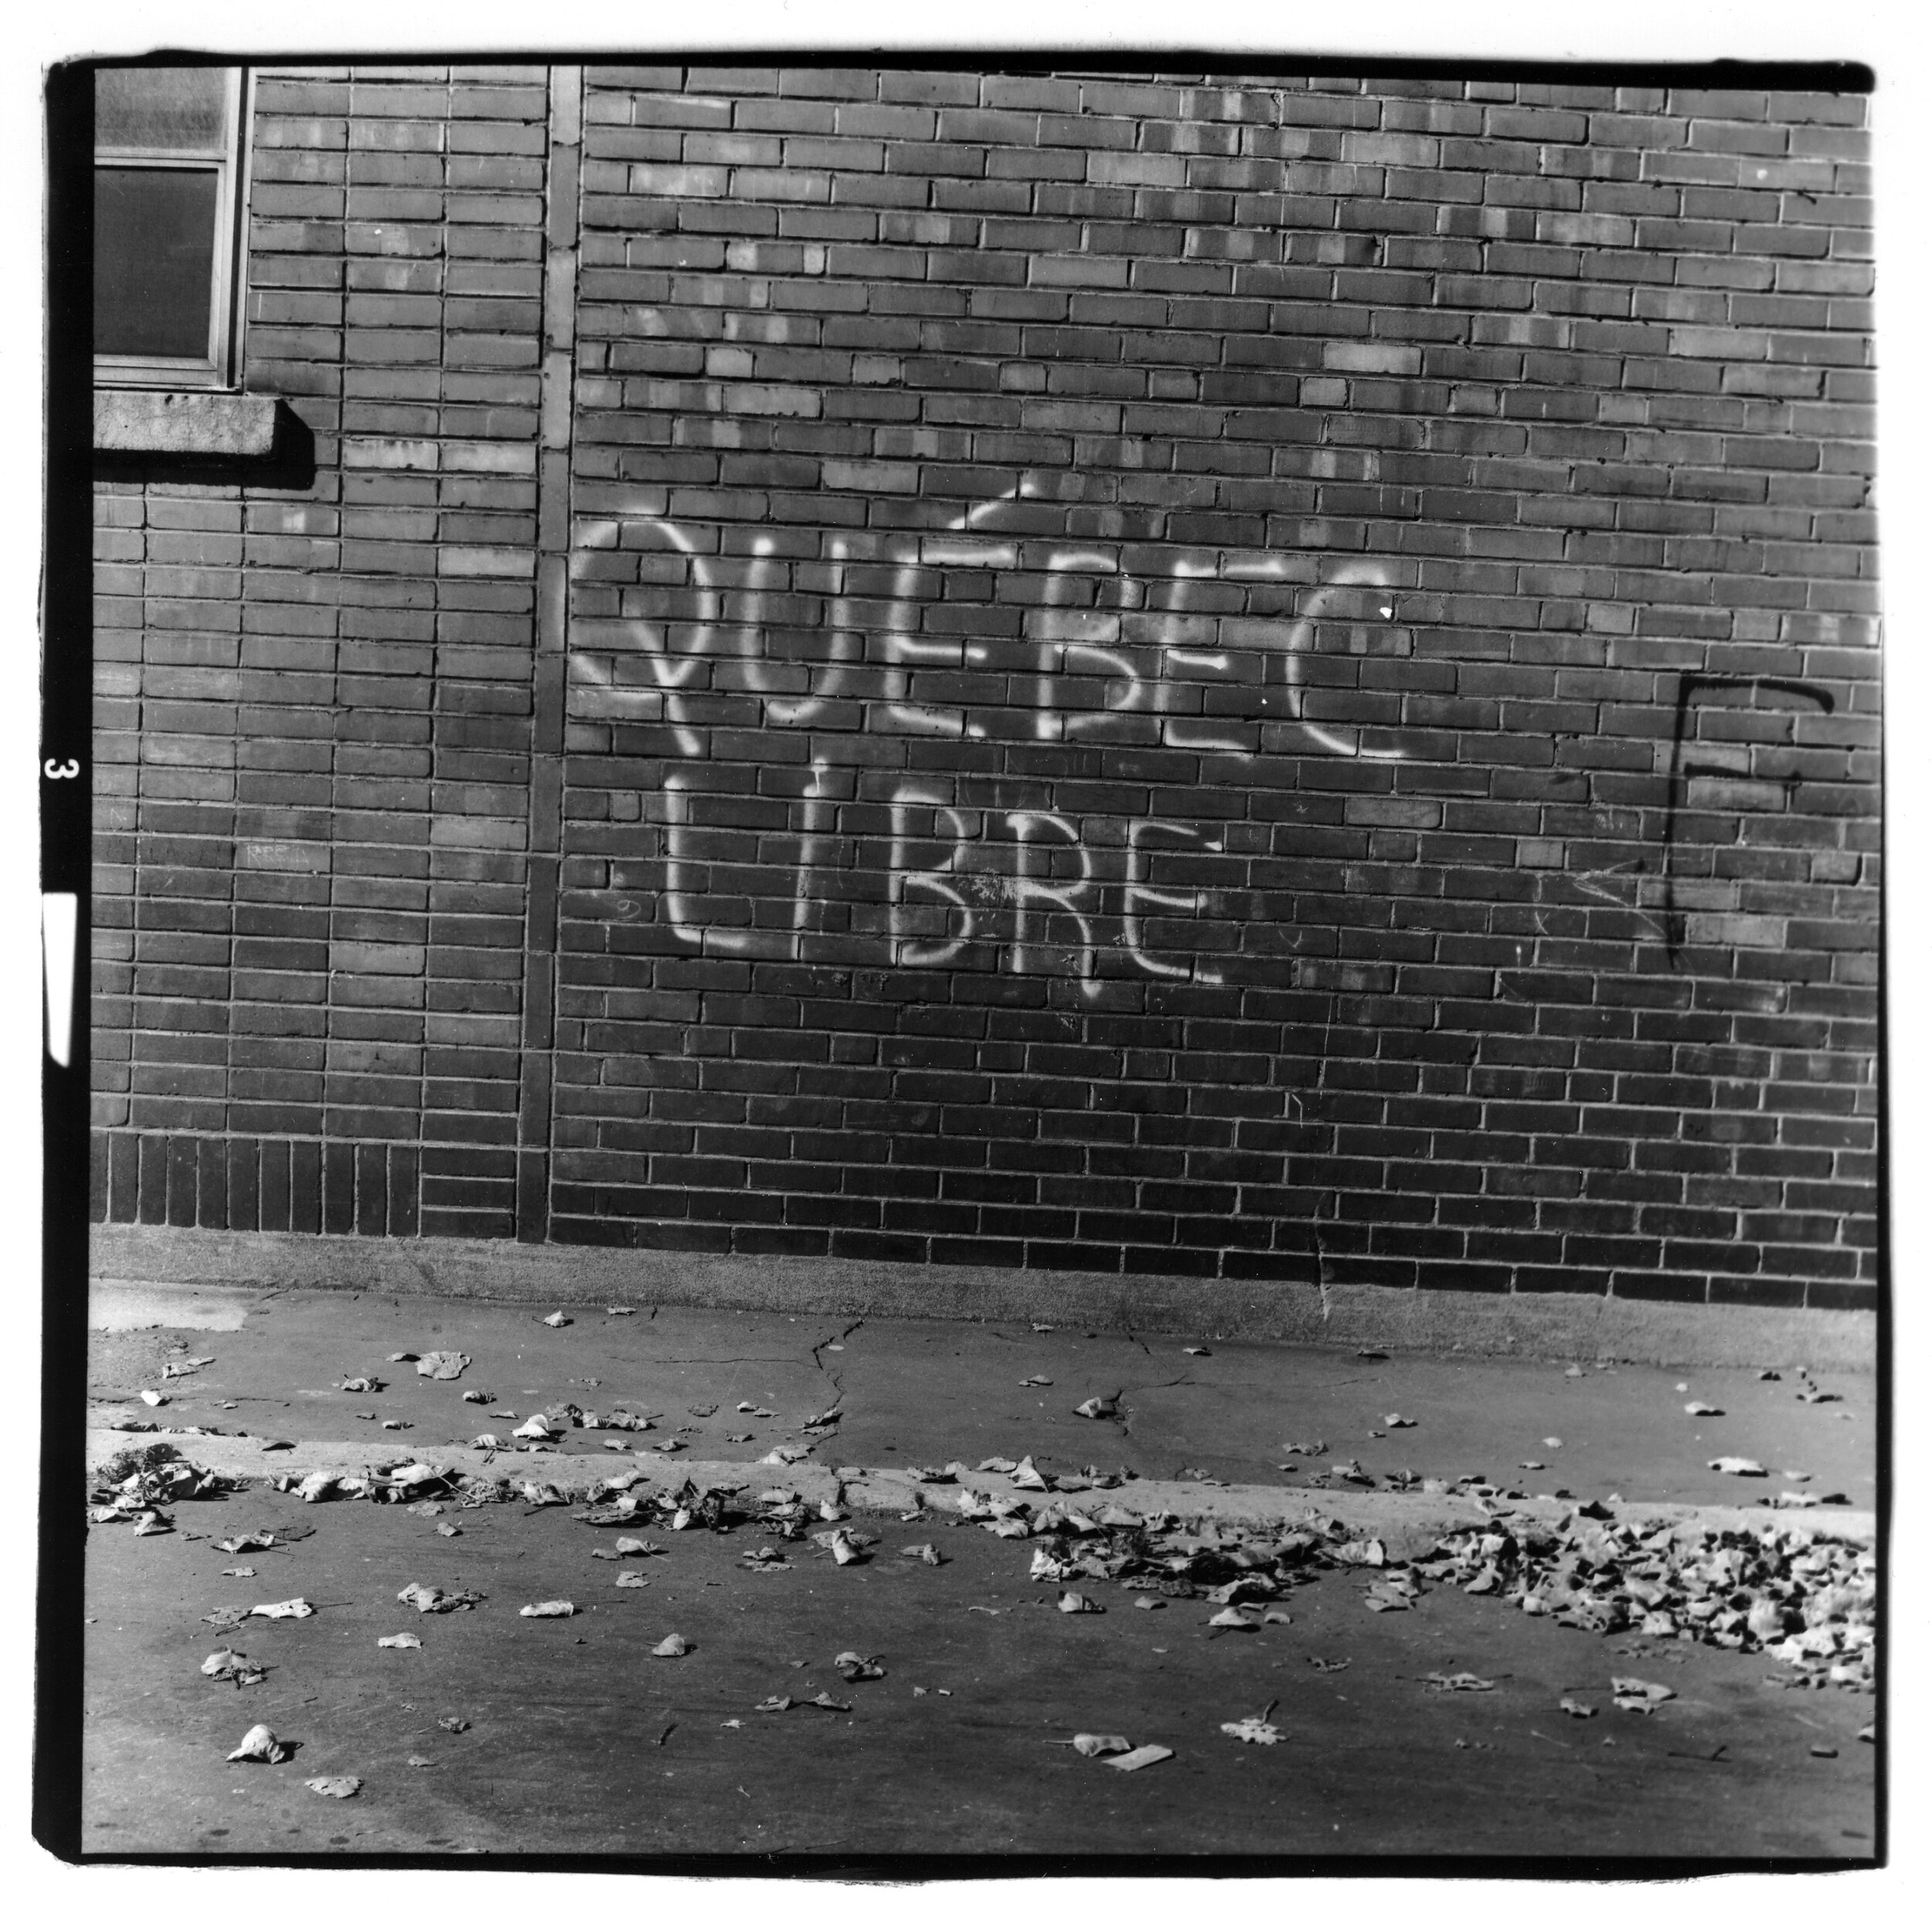 Québec Libre wall grafitti, 1970, Montreal